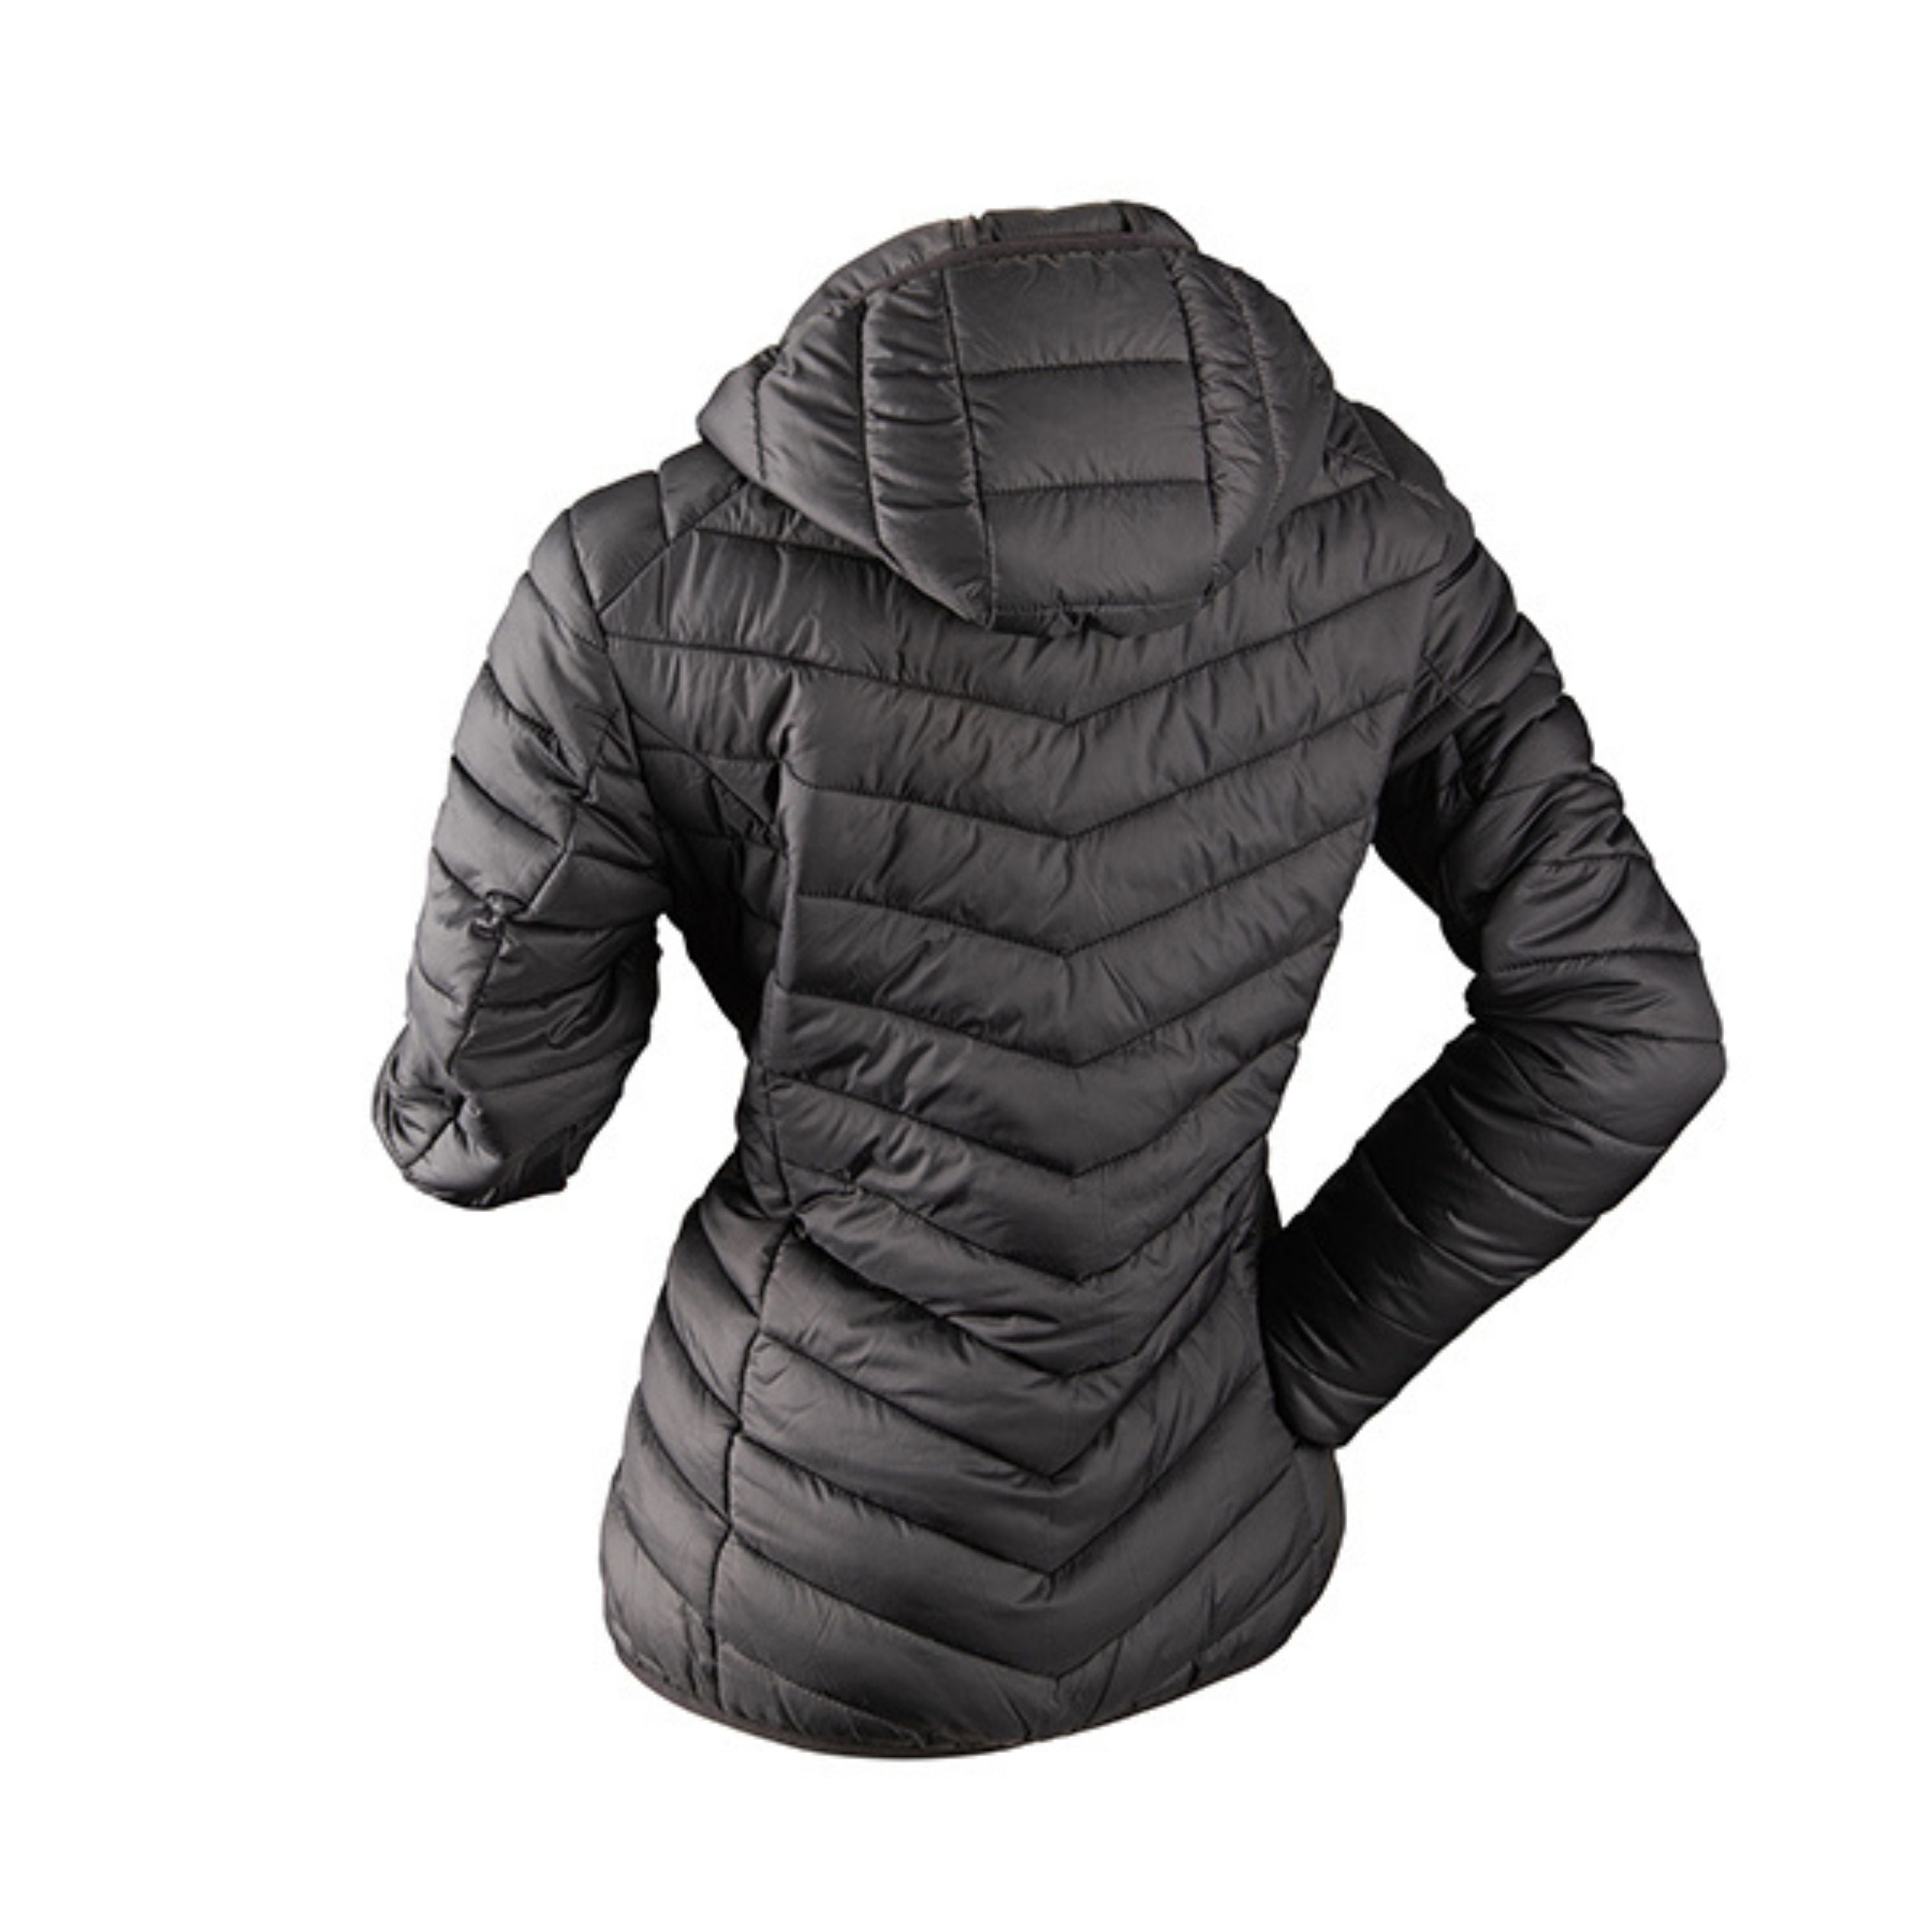 Manteau isolé "Travelex" avec capuchon - Femme||"Travelex" Insulated jacket with hood- Women's